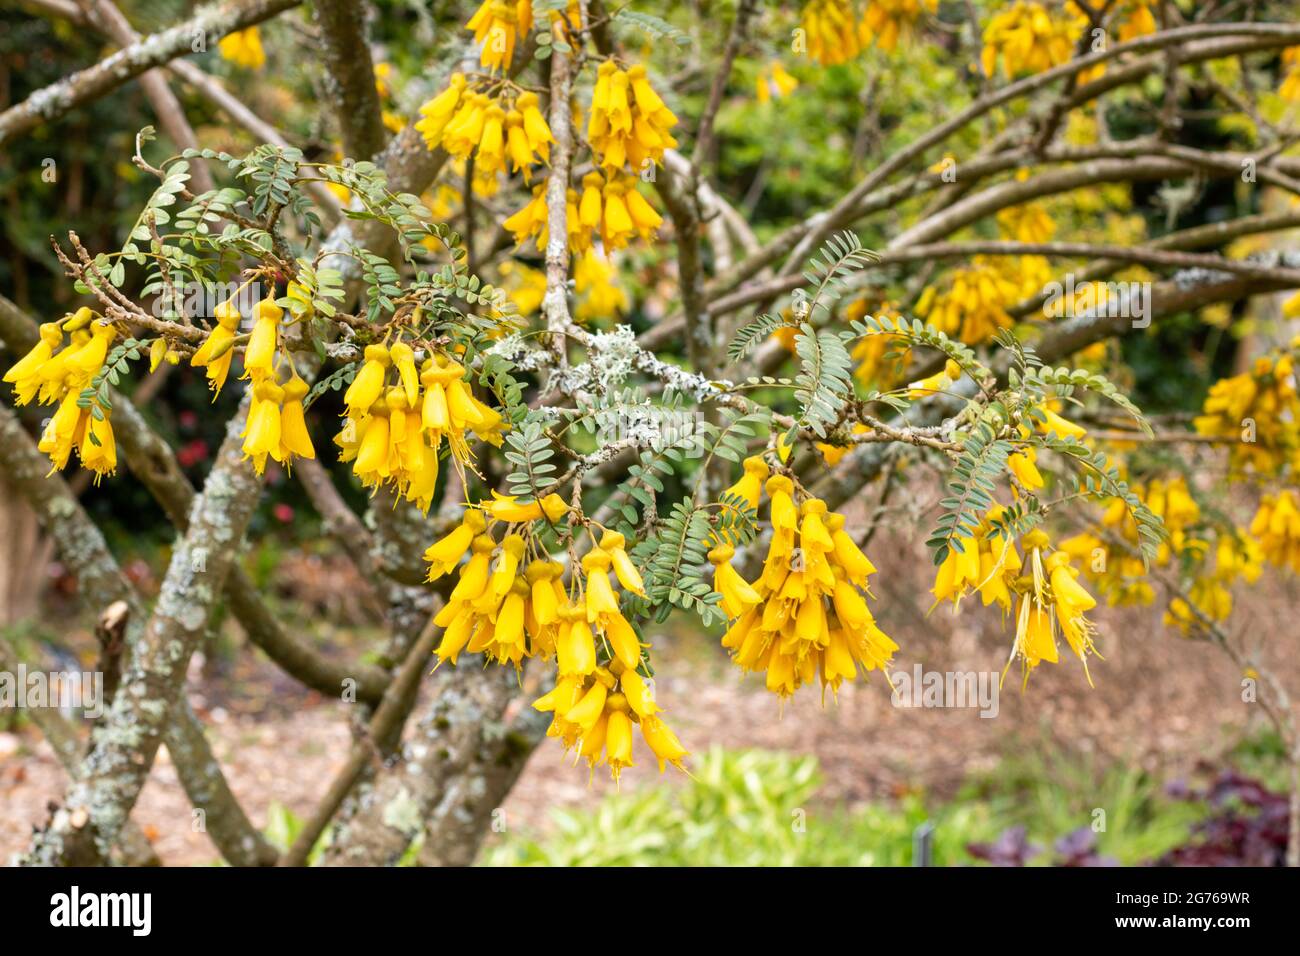 Coronilla Glauca 'Citrina', flowering shrub, pea-like yellow flowers, captured in early Spring, United Kingdom Stock Photo